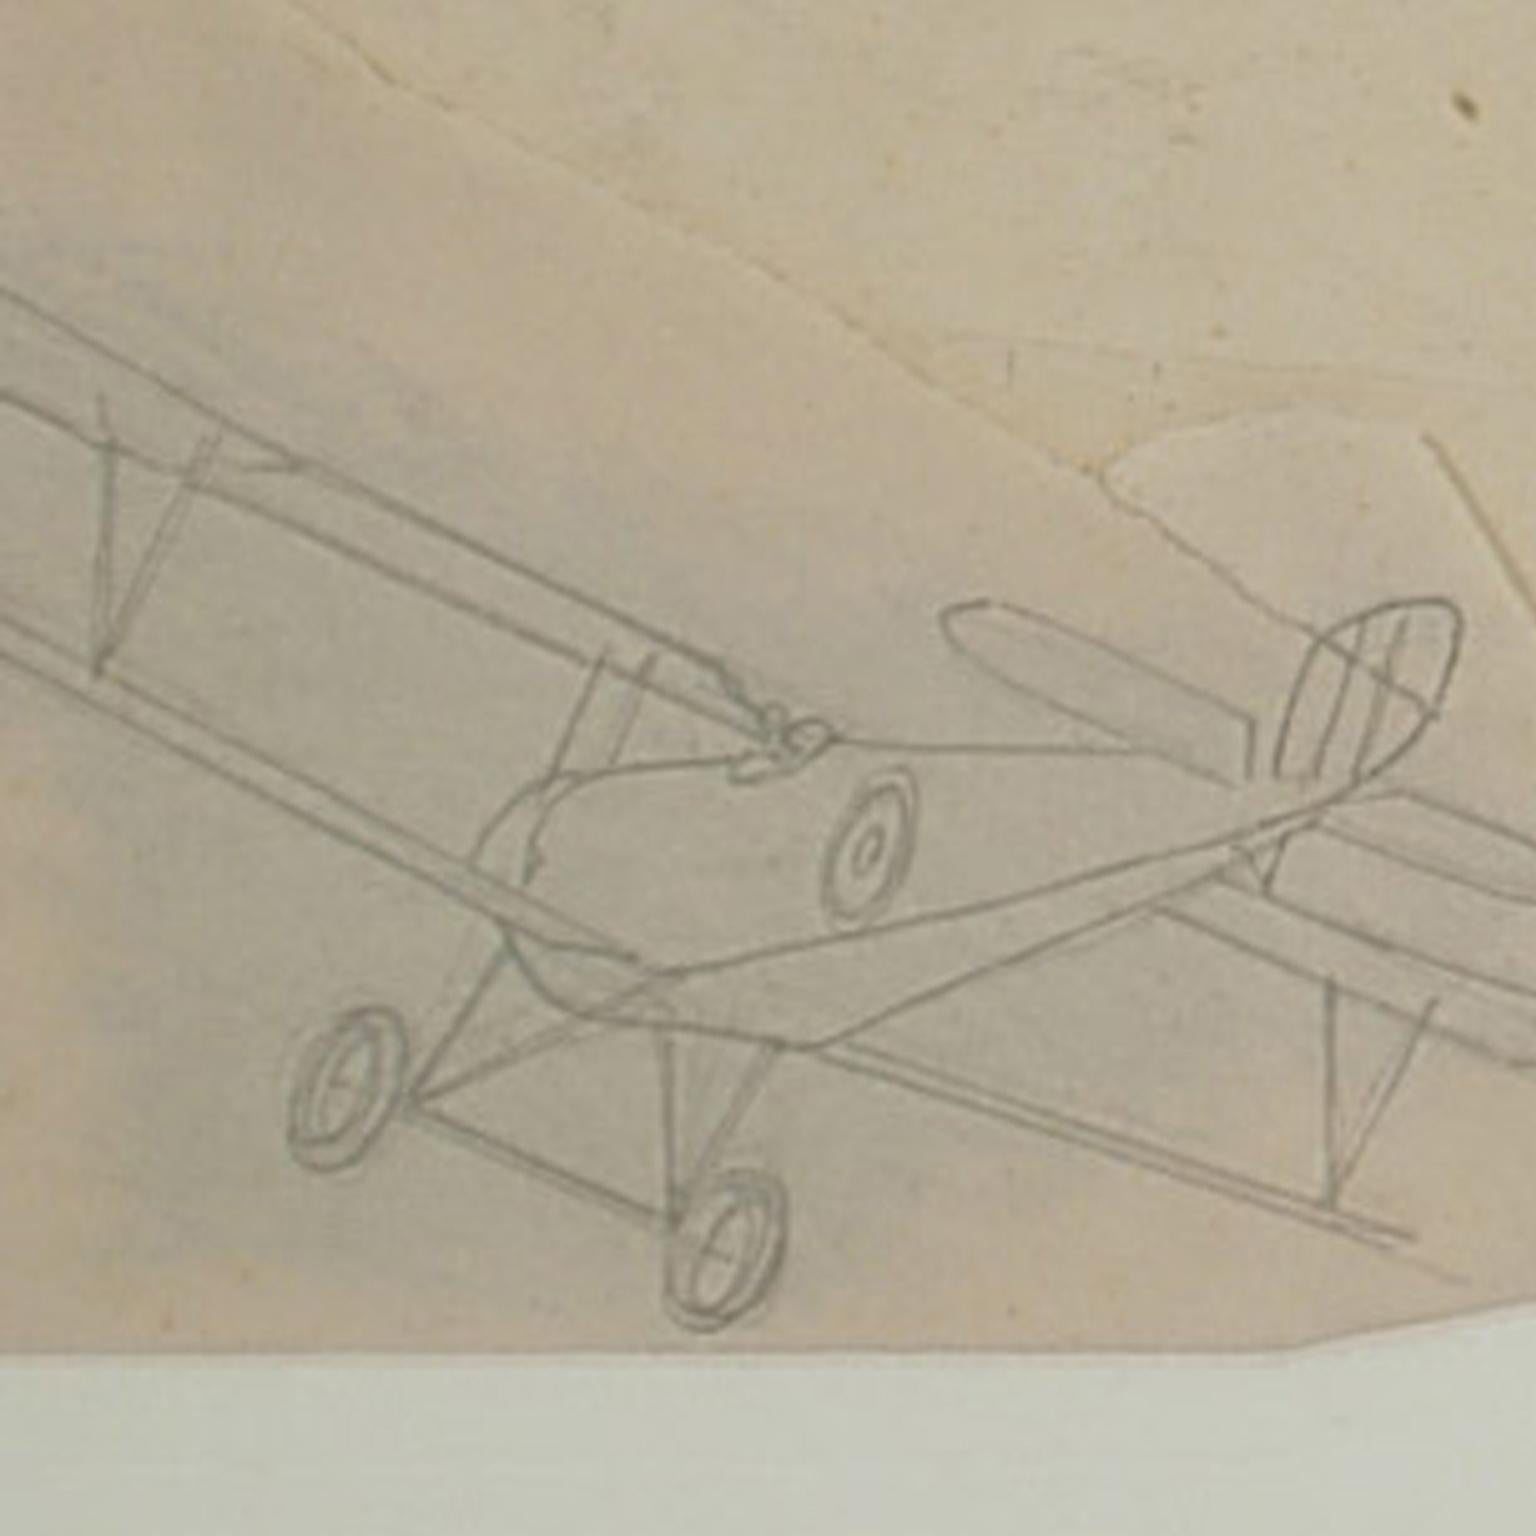 Italian Vintage Original Aviaiton Pencil-Drawing Depicting Nieuport 11 Bebe WWI Aircraft